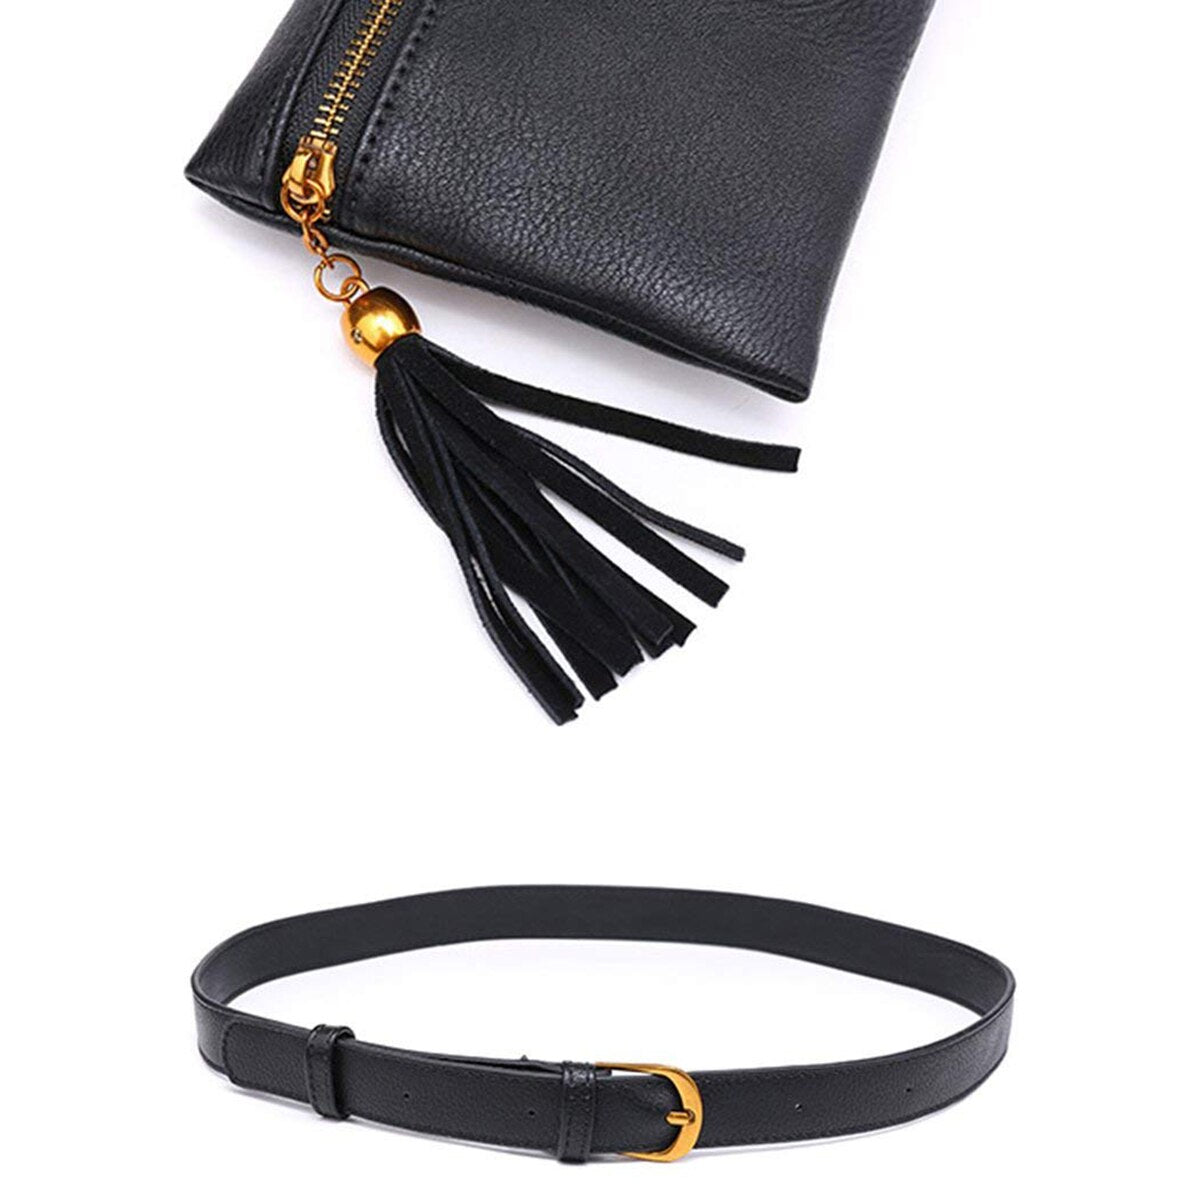 Fashion Solid Fanny Bag Black Female Adjusted Belt Bag Ladies Casual Waist Pack - ebowsos